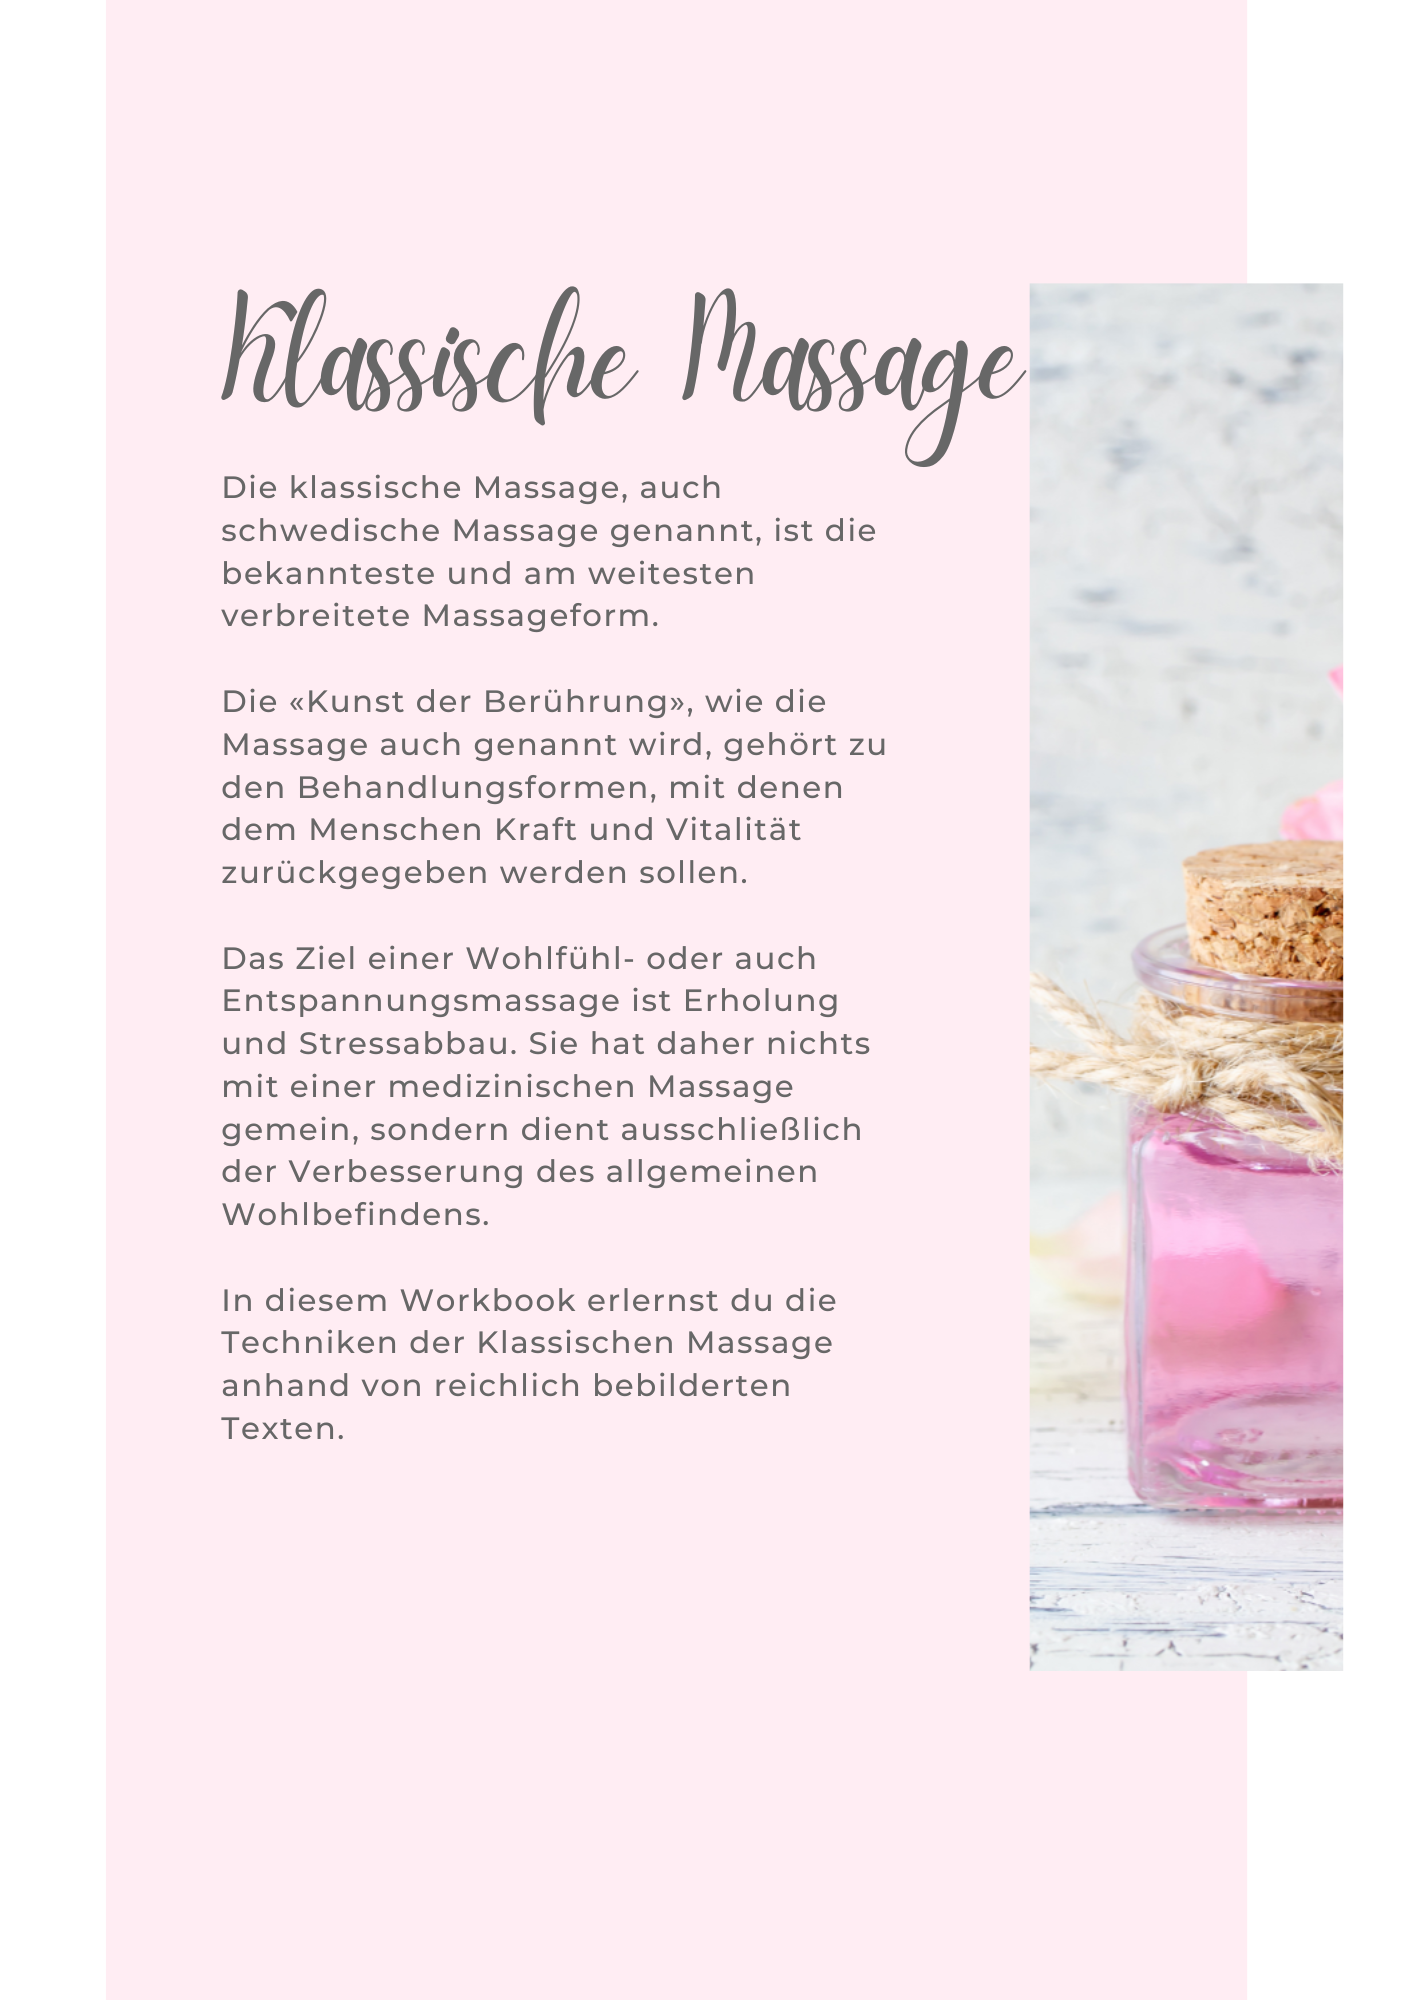 Klassische Massage mit Zertifikat